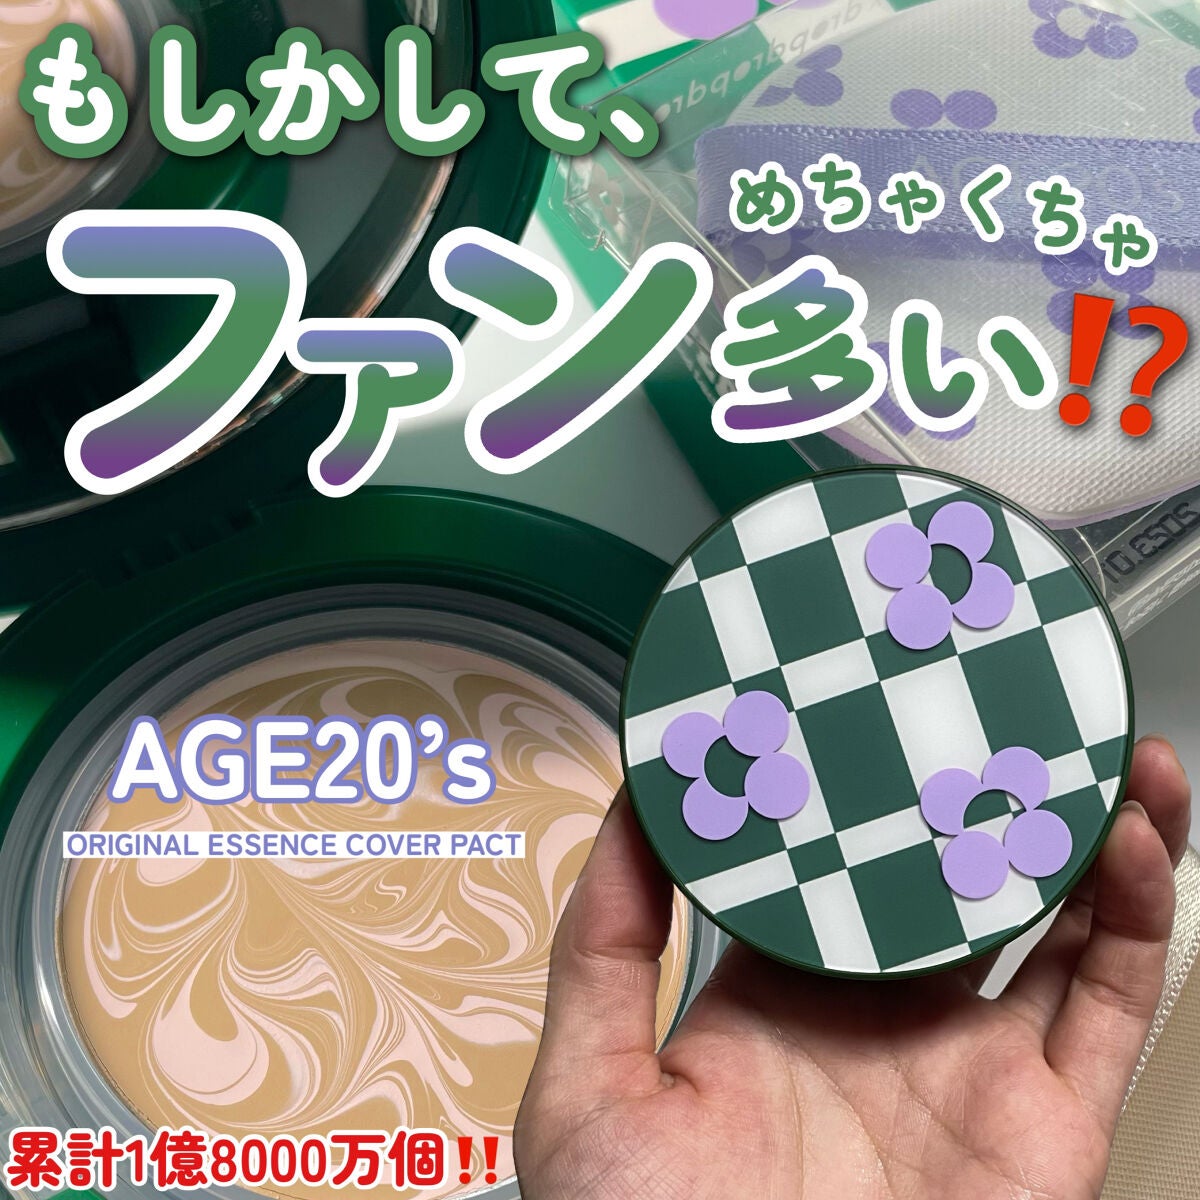 ORIGINAL ESSENCE COVER PACT ピンクラテ(21号) / AGE20's | LIPS